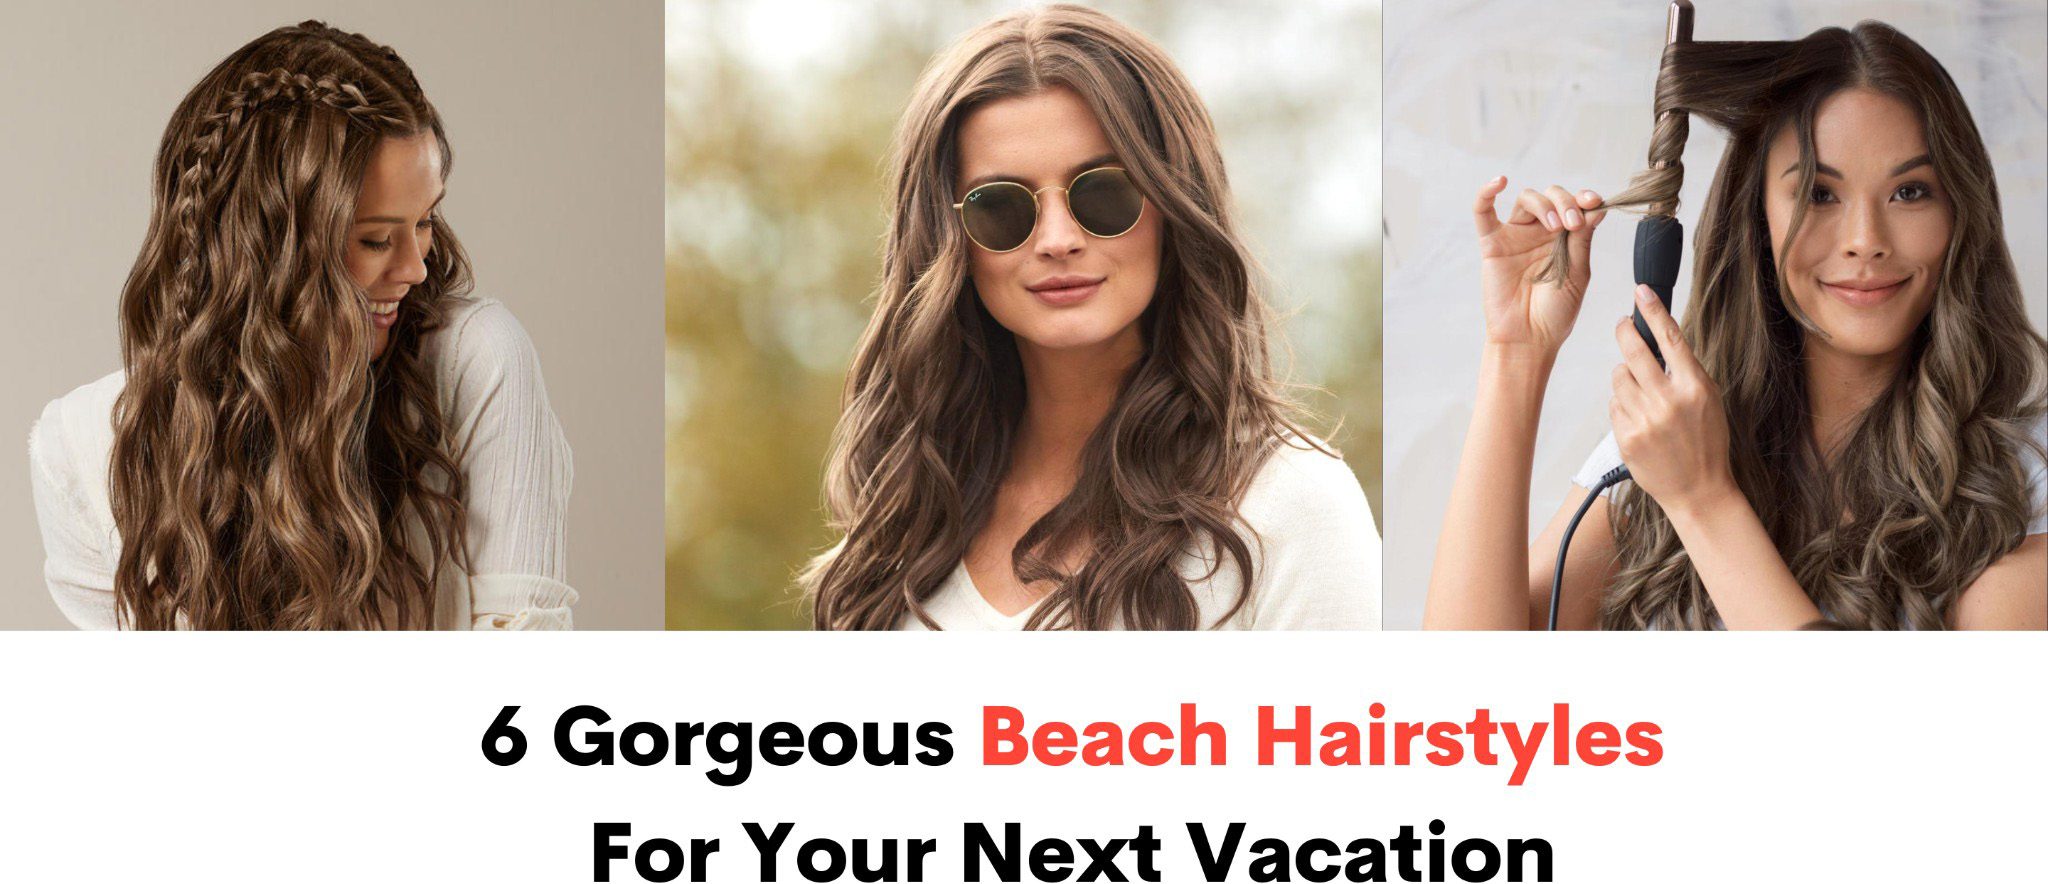 6 gorgeous beach hairstyles